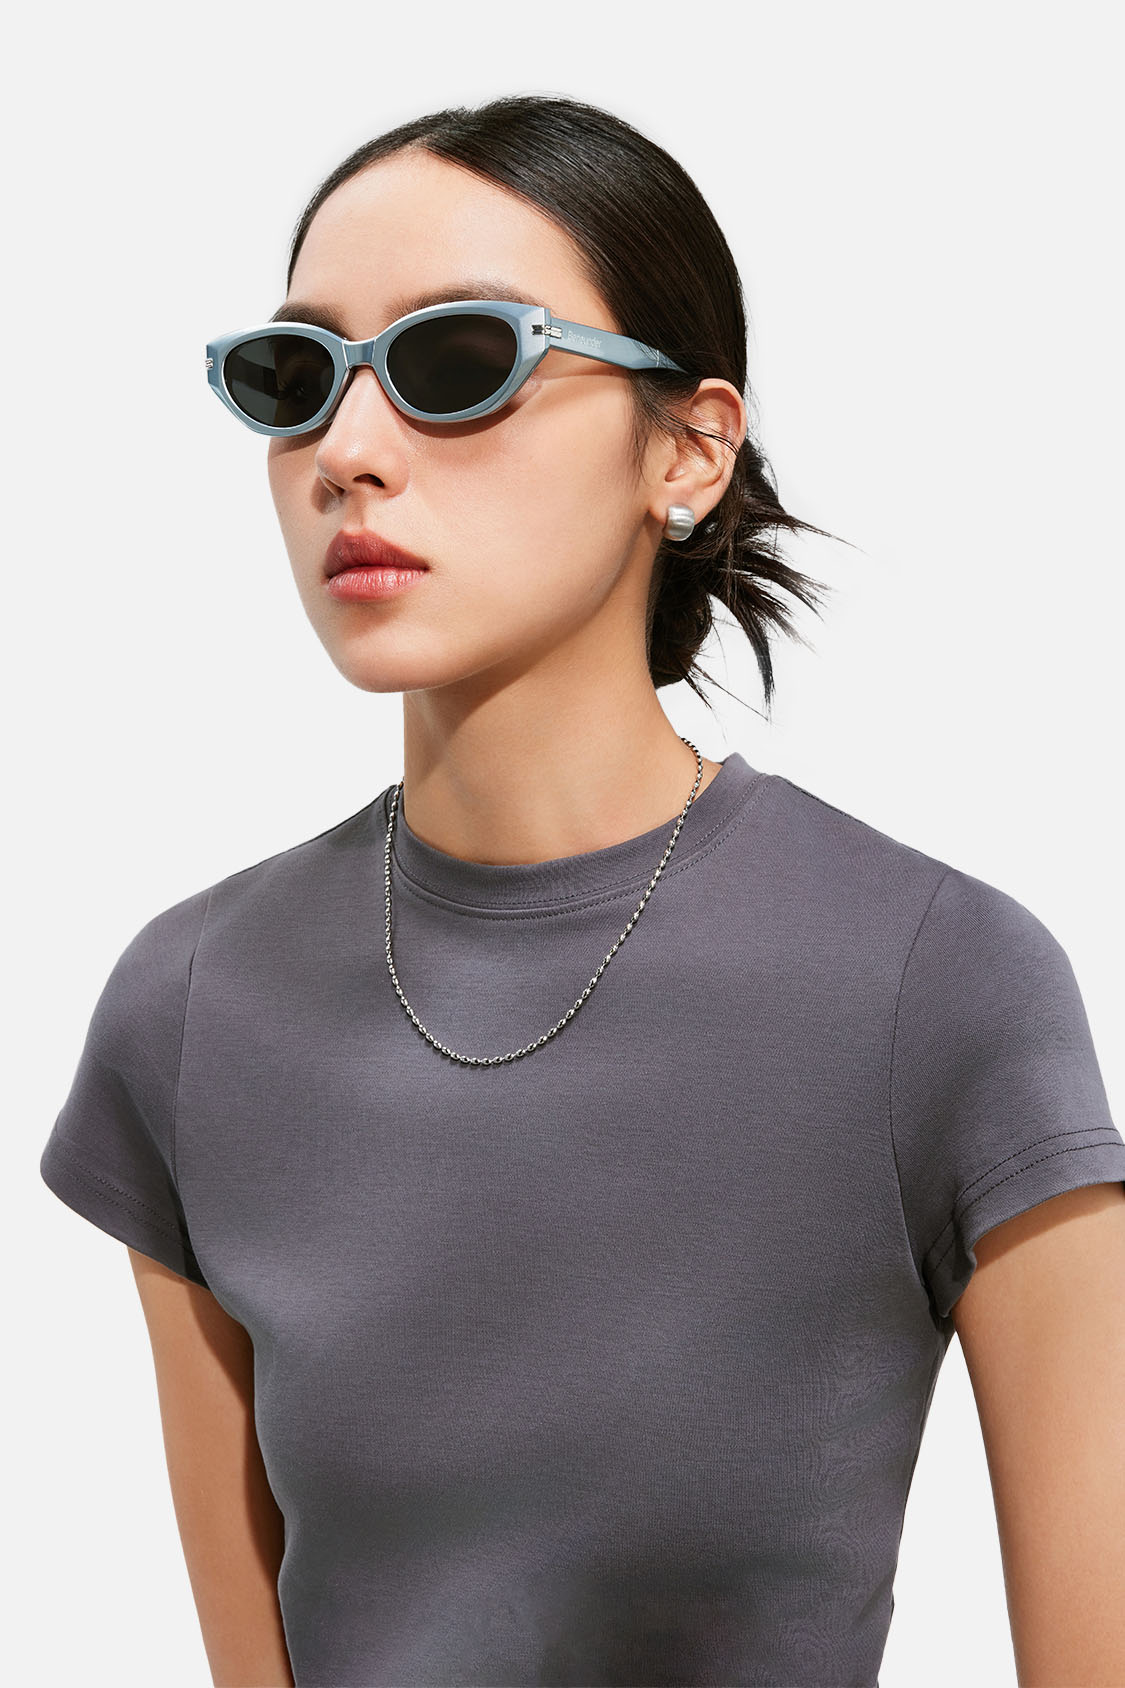 beneunder women's folding sunglasses #color_galaxy blue